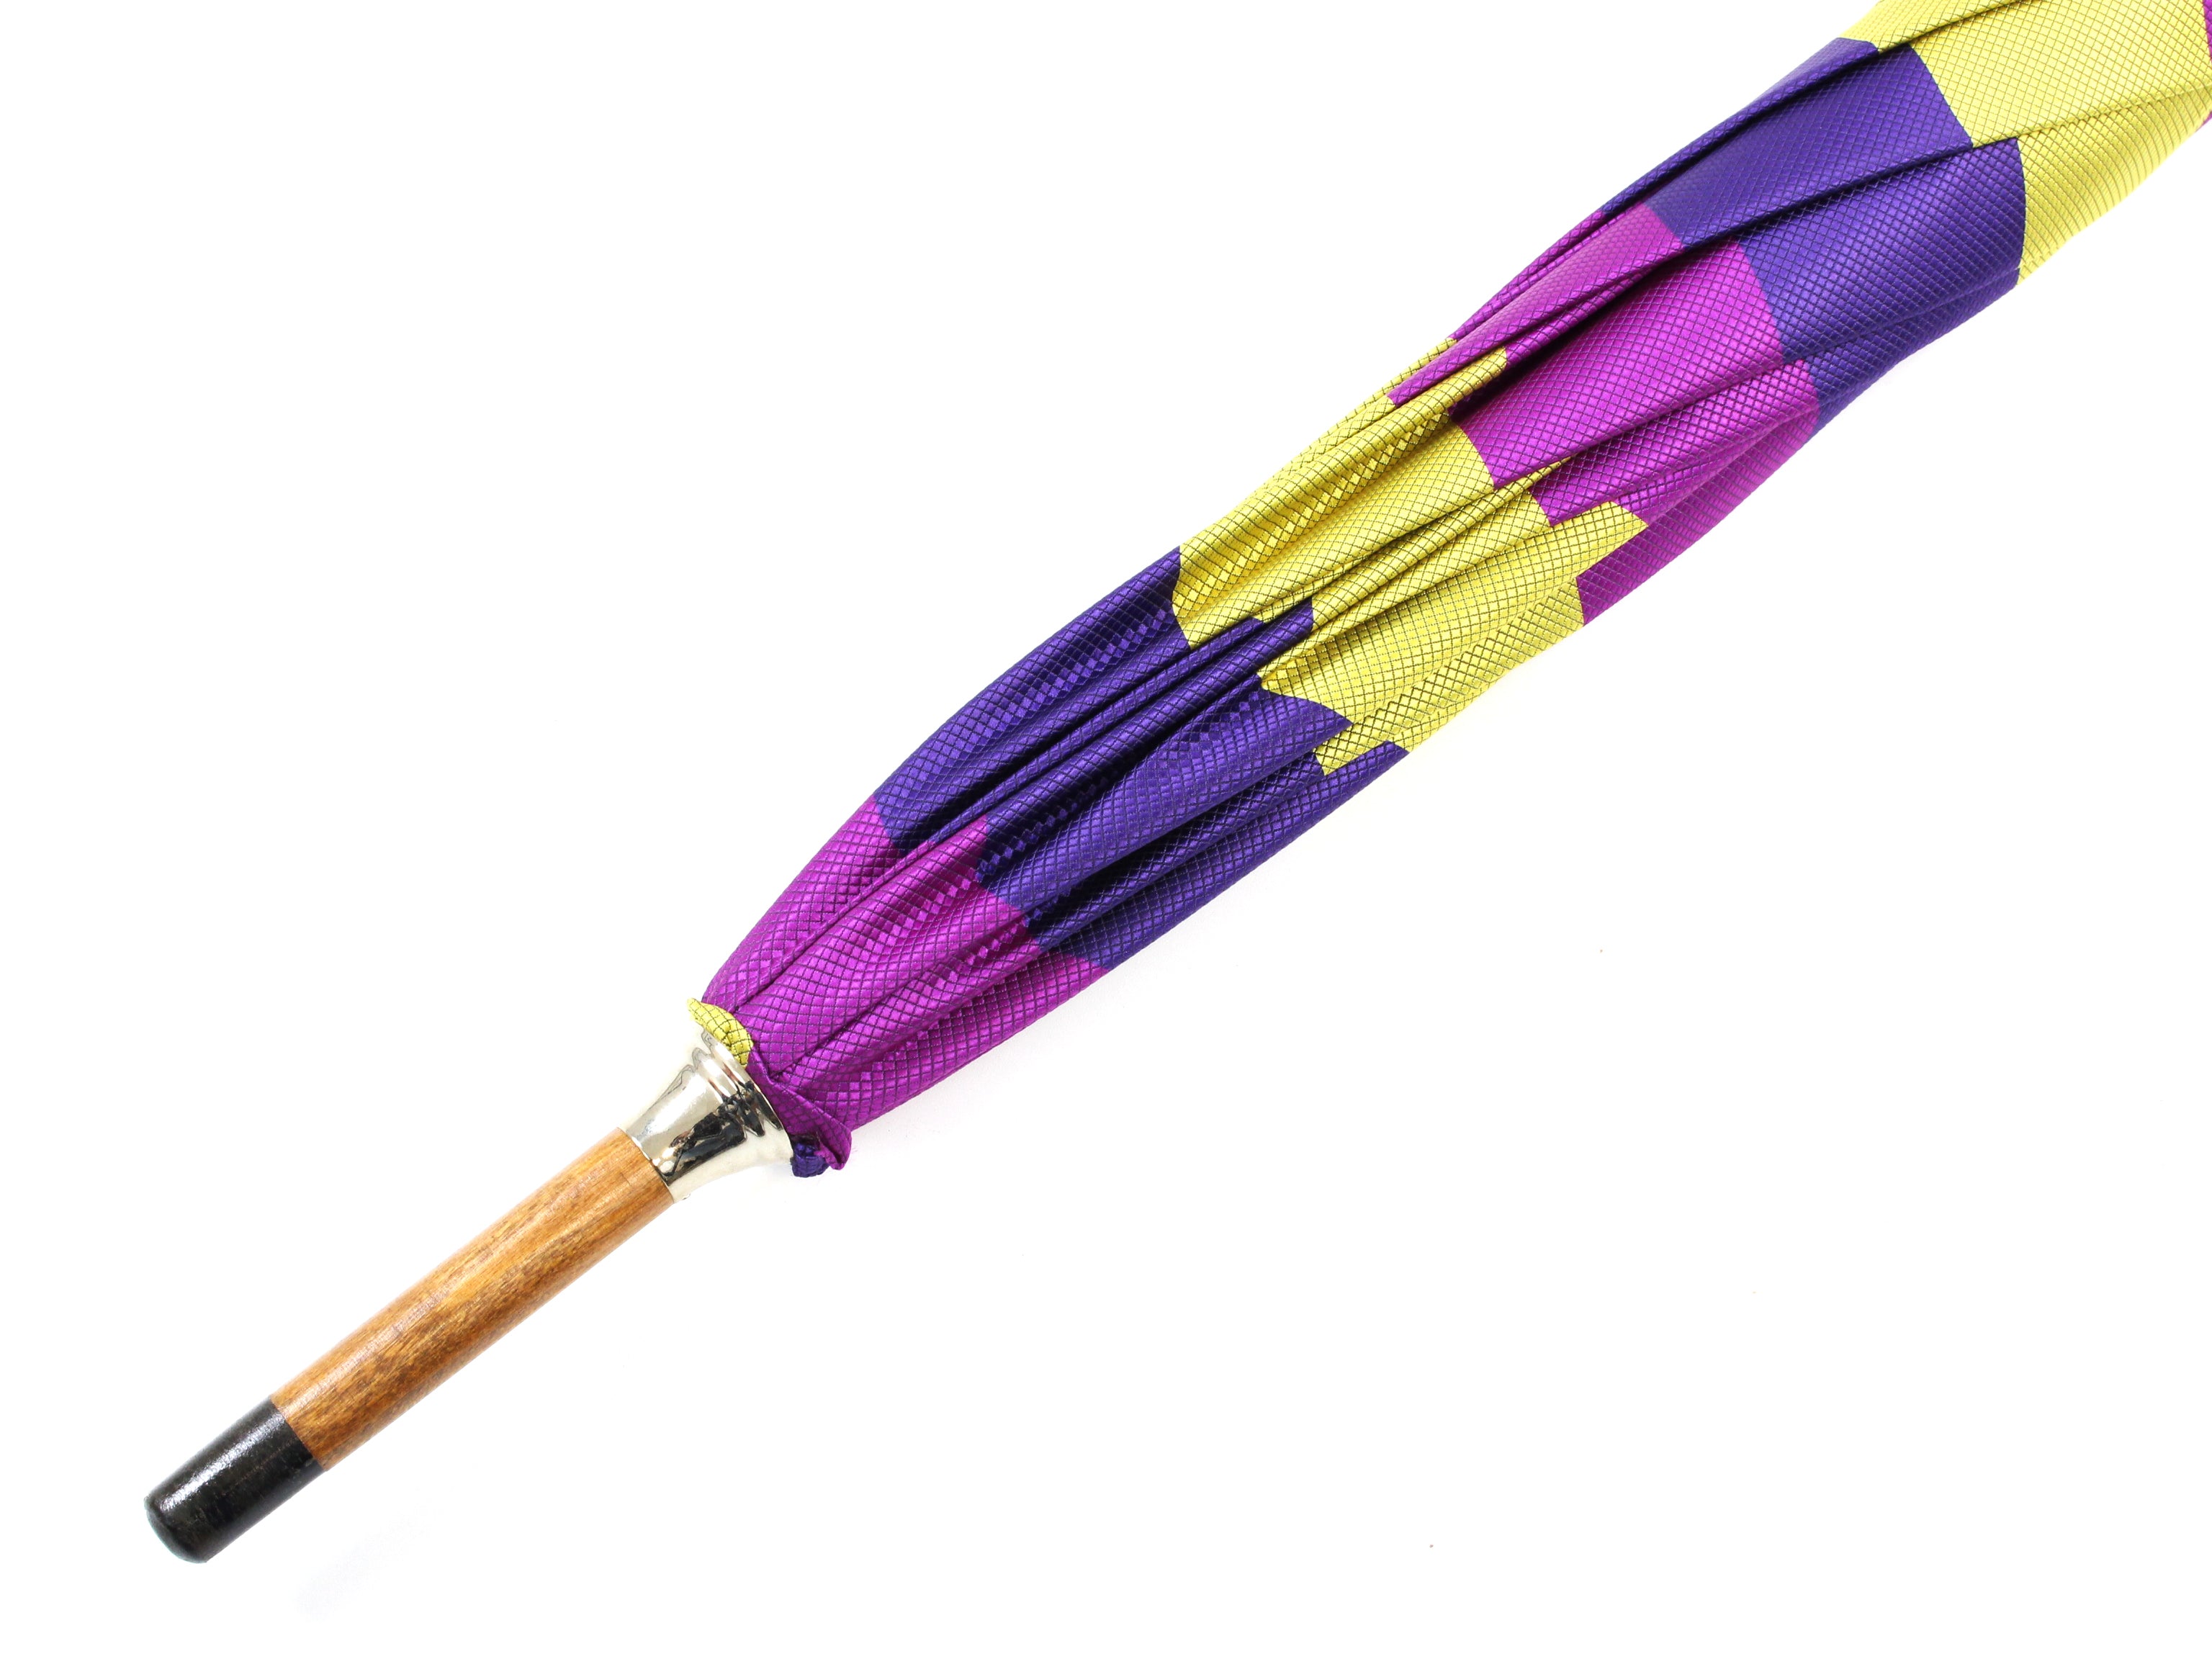 Umbrella 21399 purple / yellow